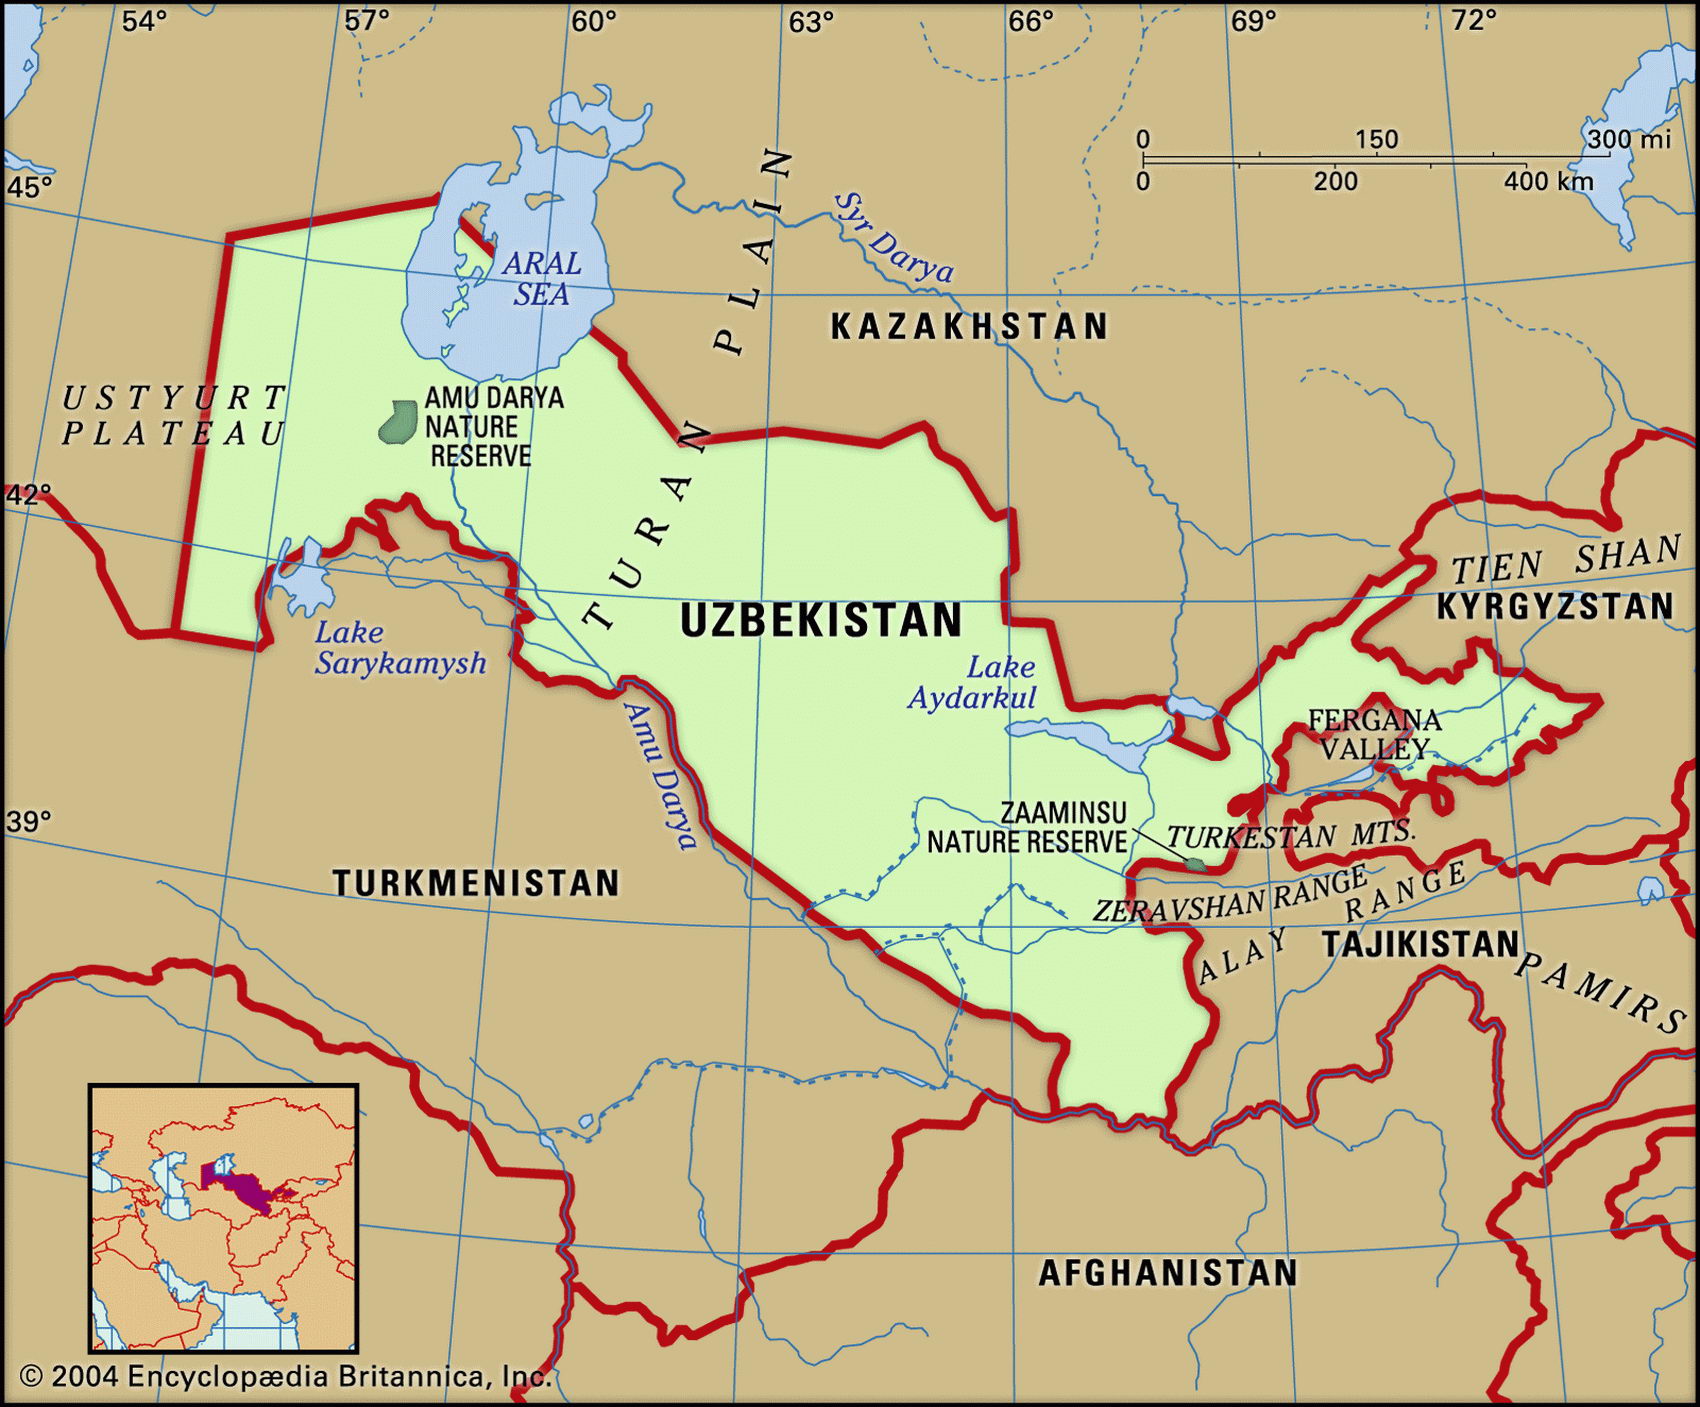 Карта и узбекистана - 95 фото